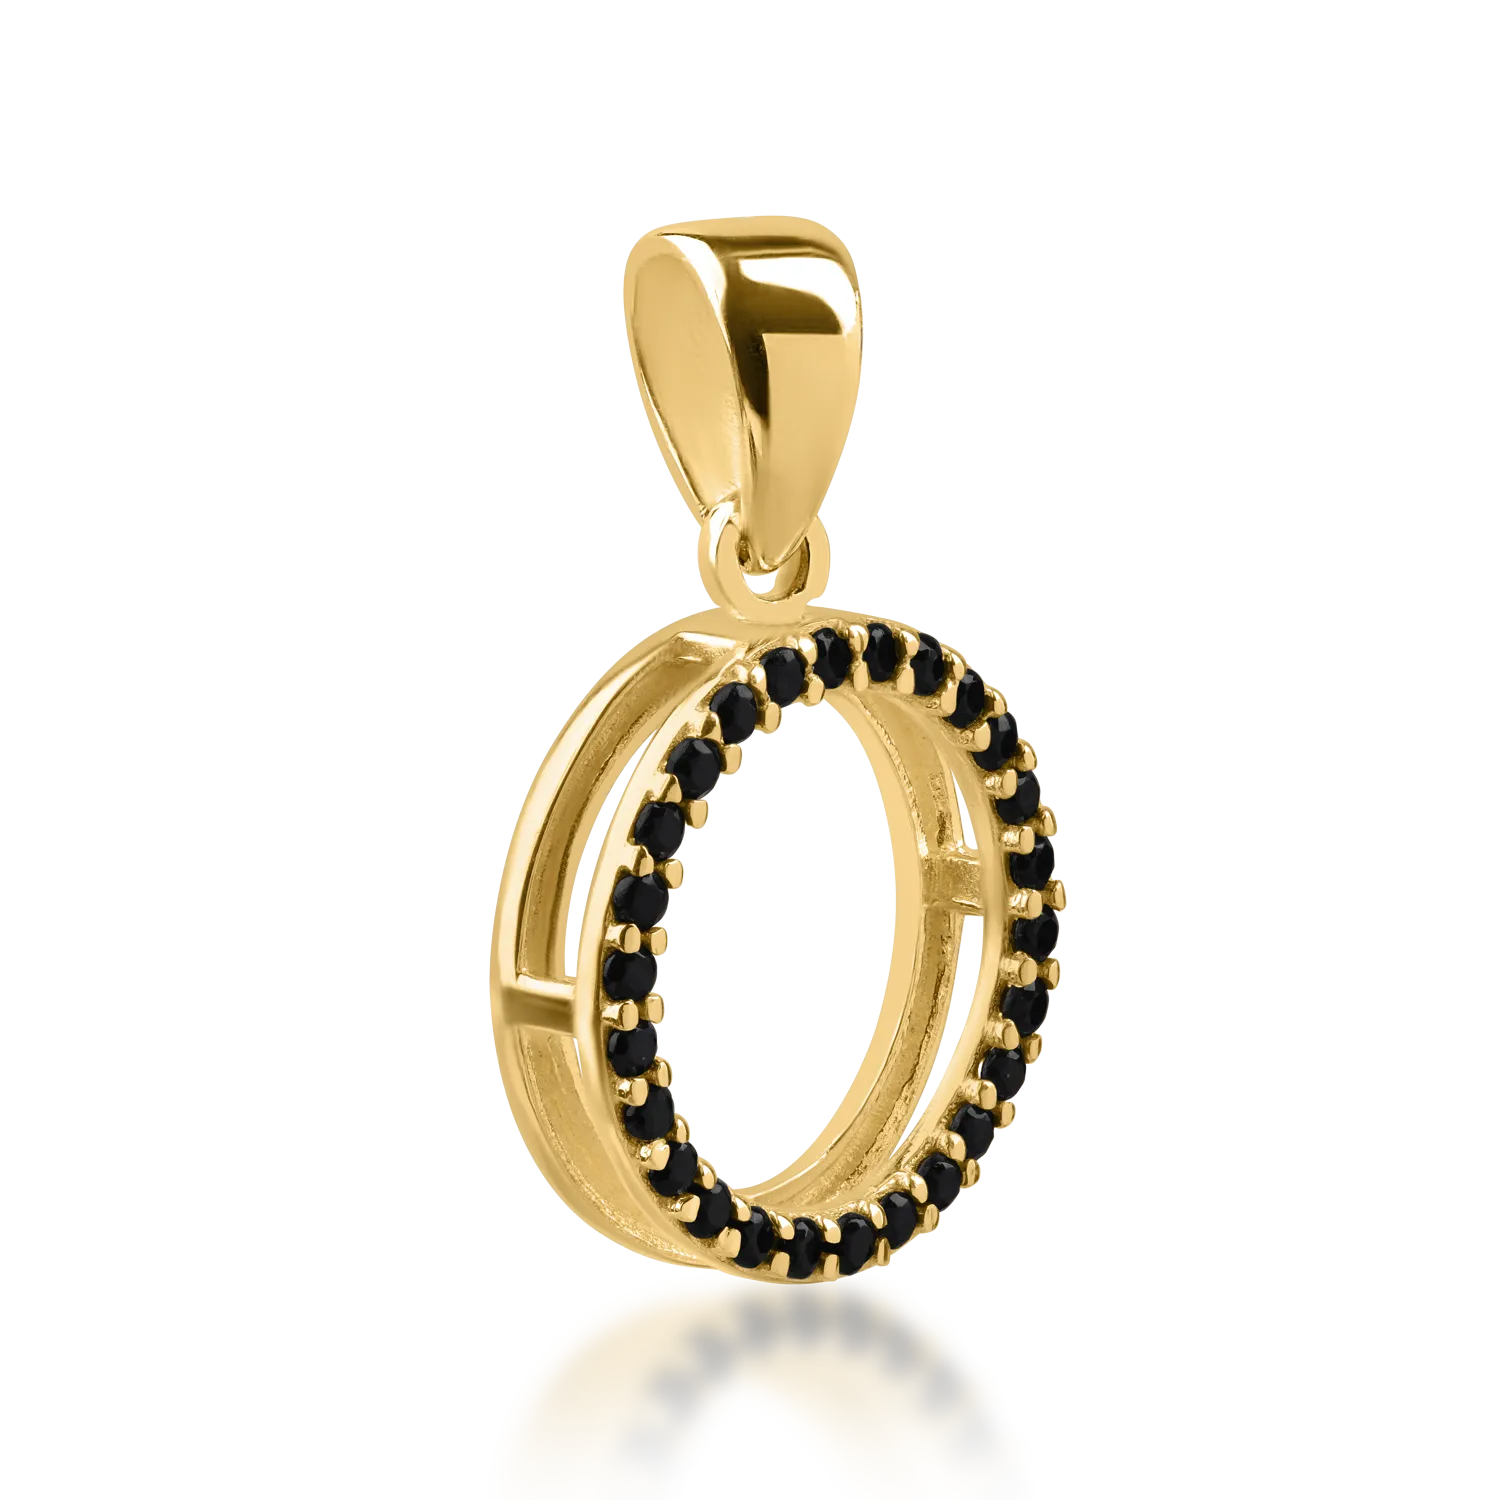 Yellow gold circle pendant with black zirconia